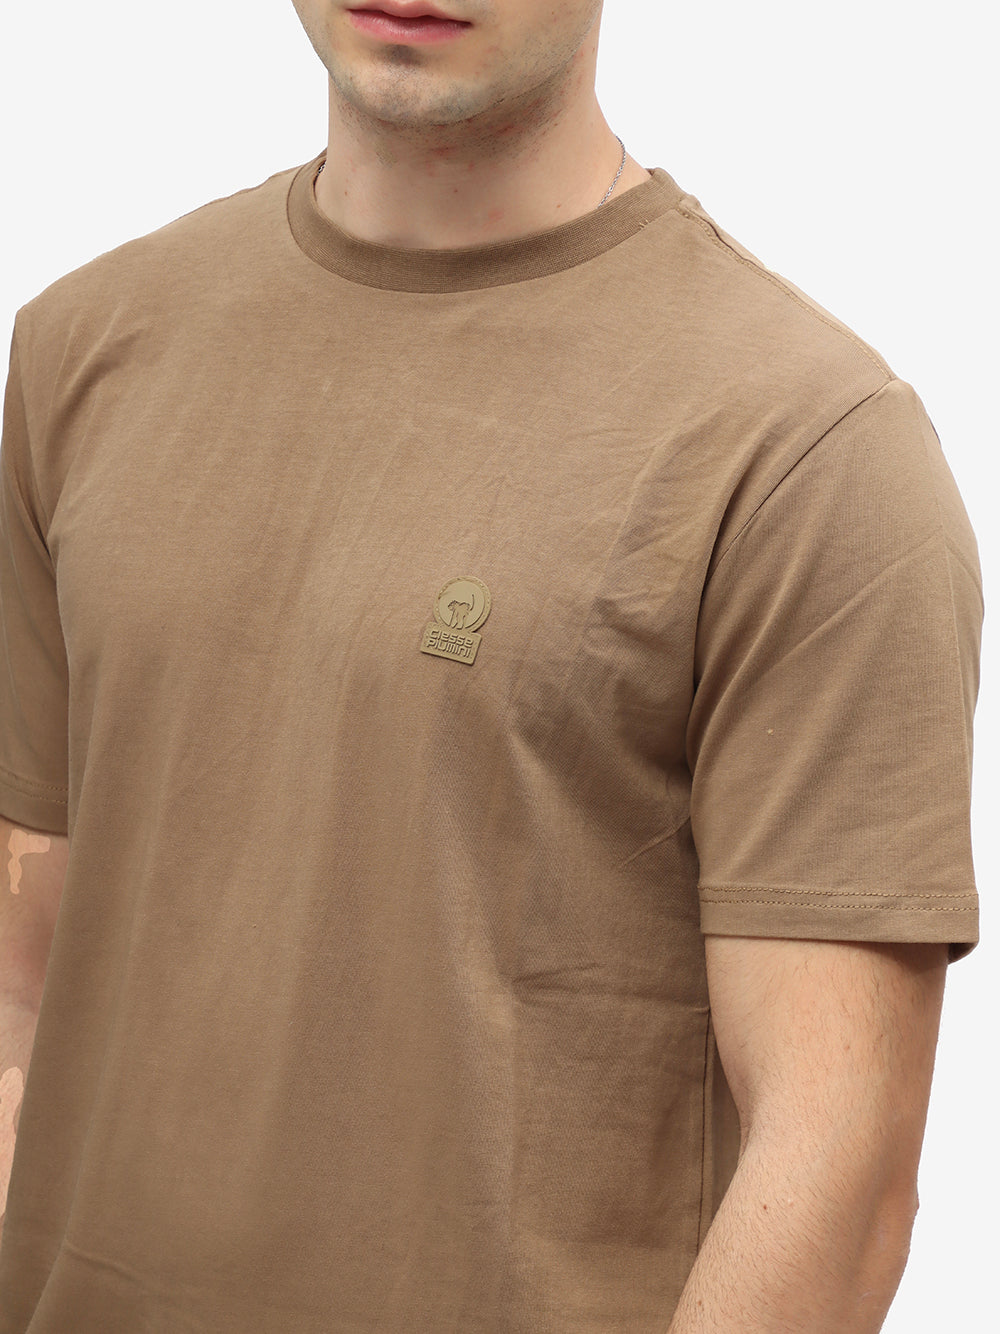 Ciesse Piumini T-Shirt Uomo Rupi-Sabbia